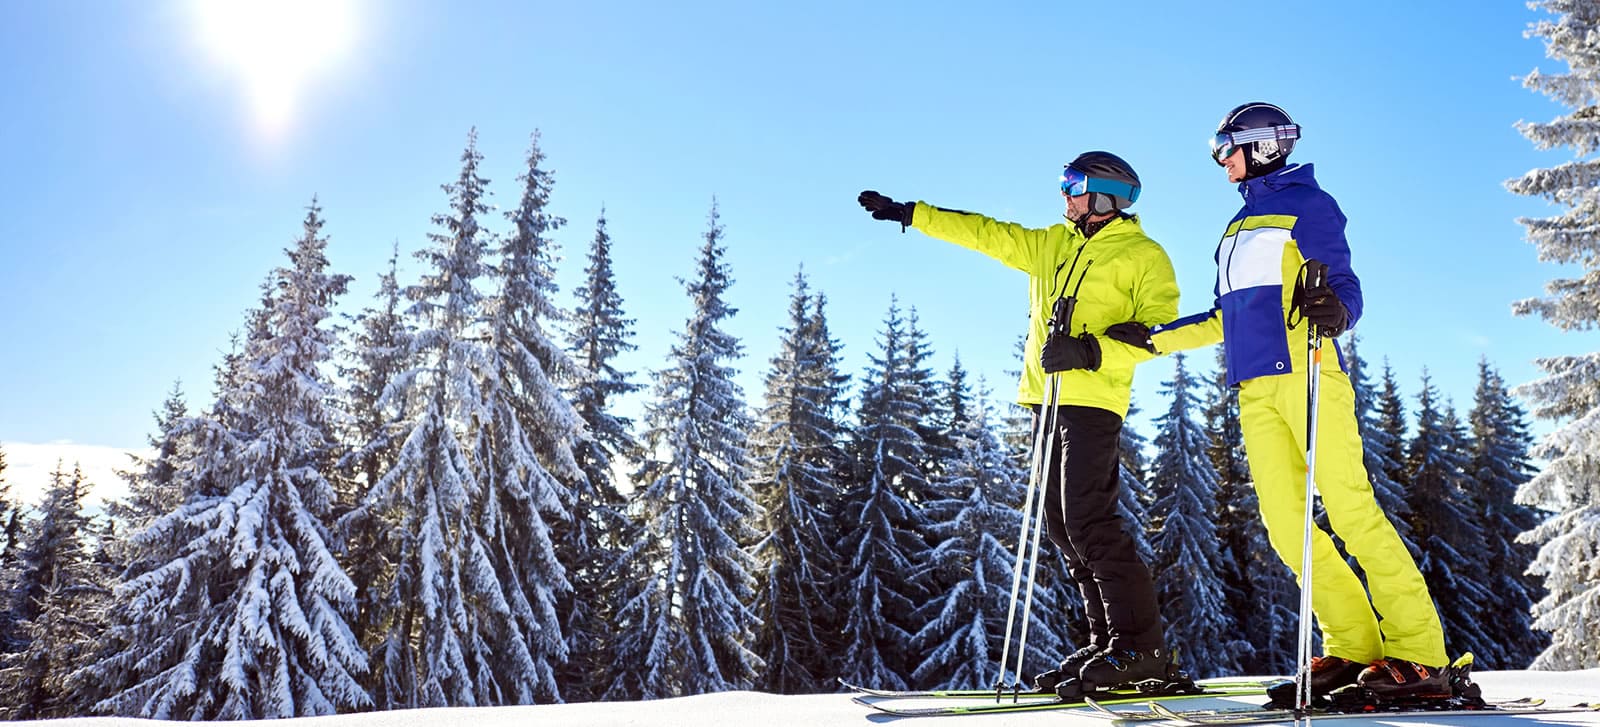 Skischule - Skikurs - Skilehrer in den Alpen ❄ SNOWELL